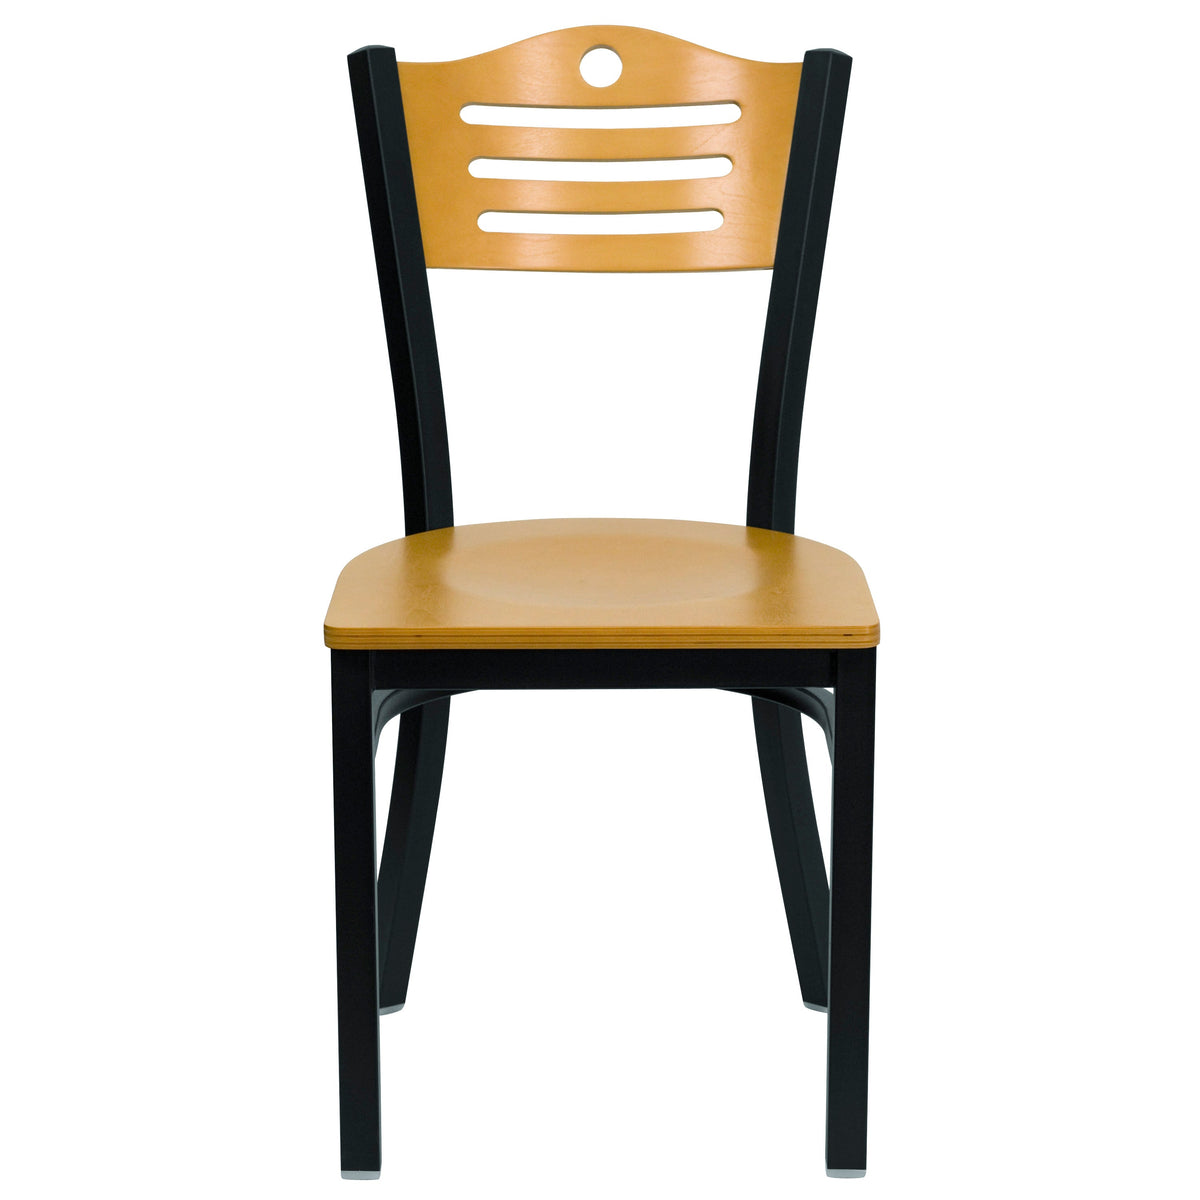 Natural Wood Back/Natural Wood Seat/Black Metal Frame |#| Black Slat Back Metal Restaurant Chair - Natural Wood Back & Seat